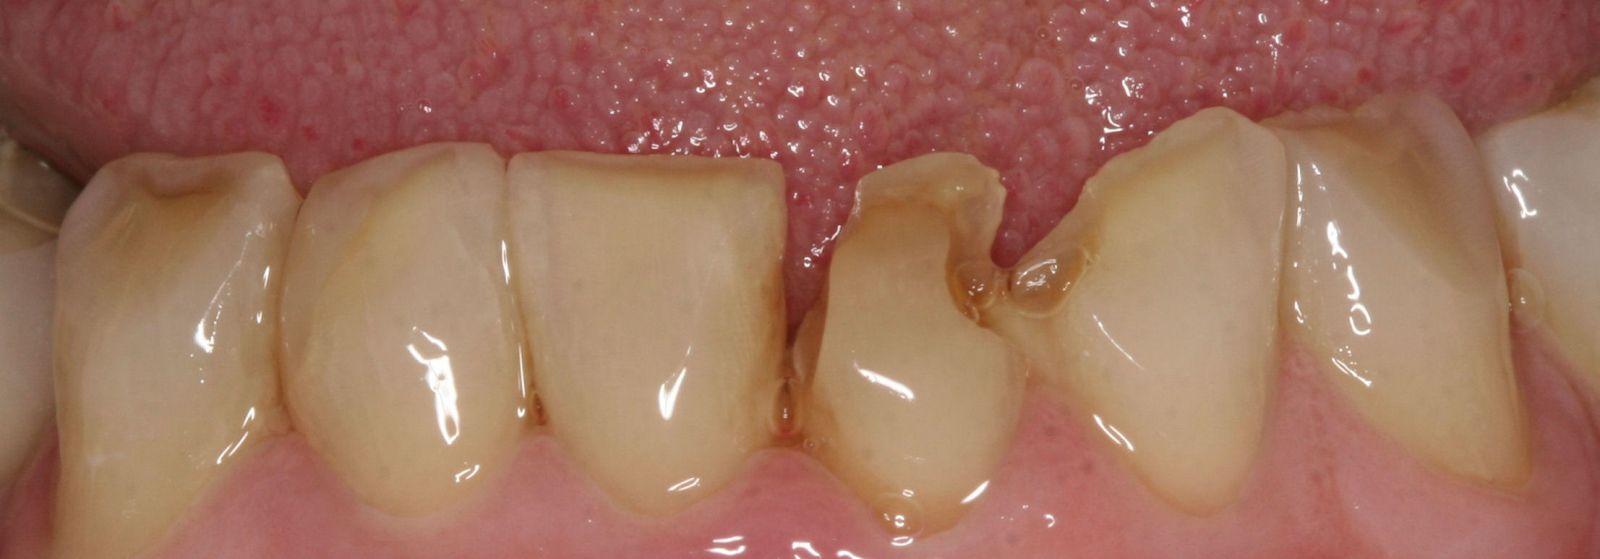 Lower Anterior Teeth Before Treatment 